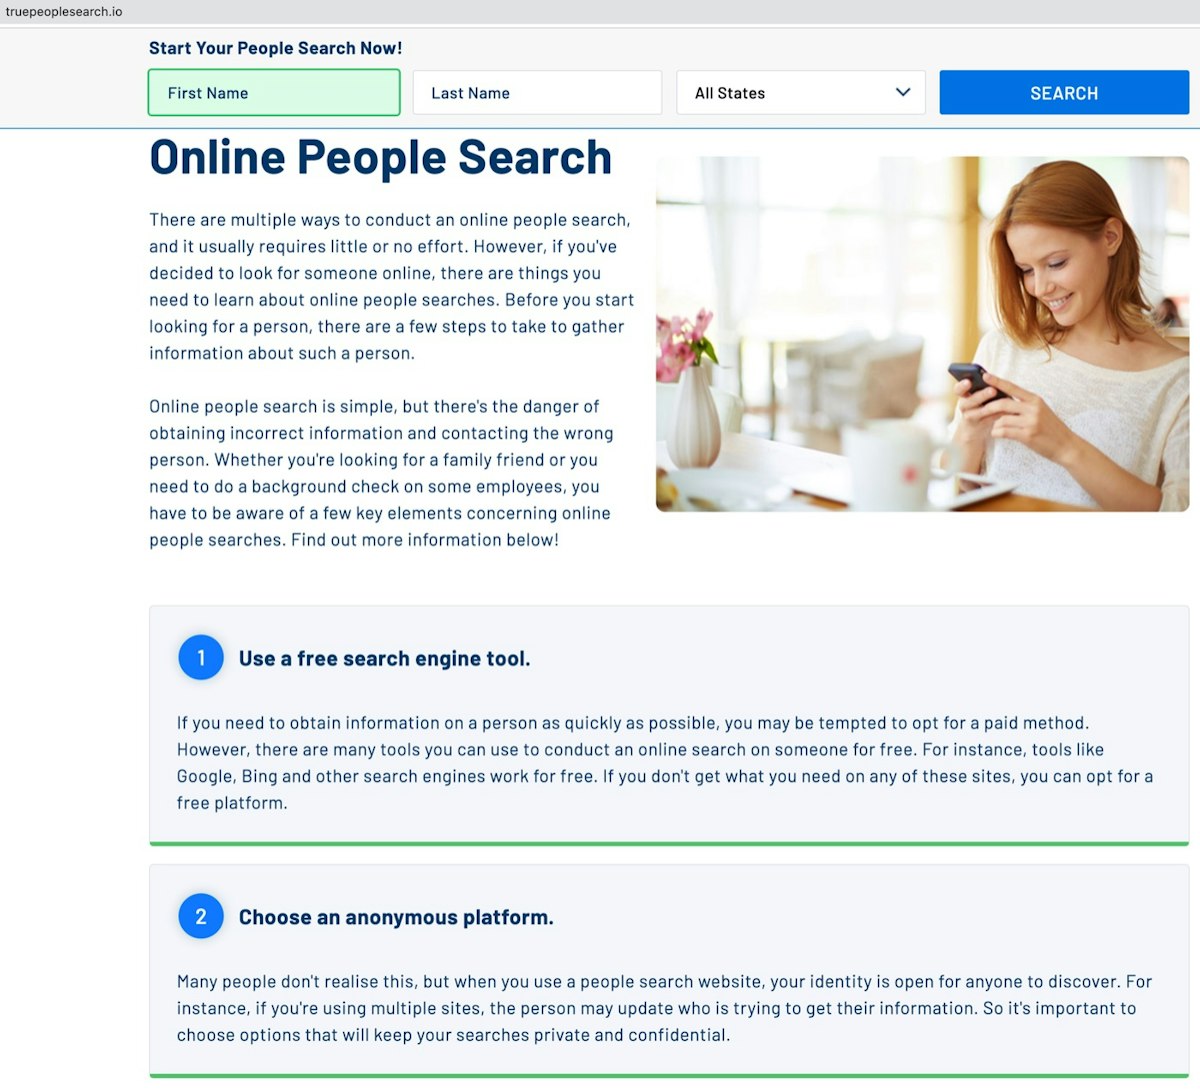 featured image - TruePeopleSearch.io: ガイド
高度な人物検索エンジンの利点と使用例